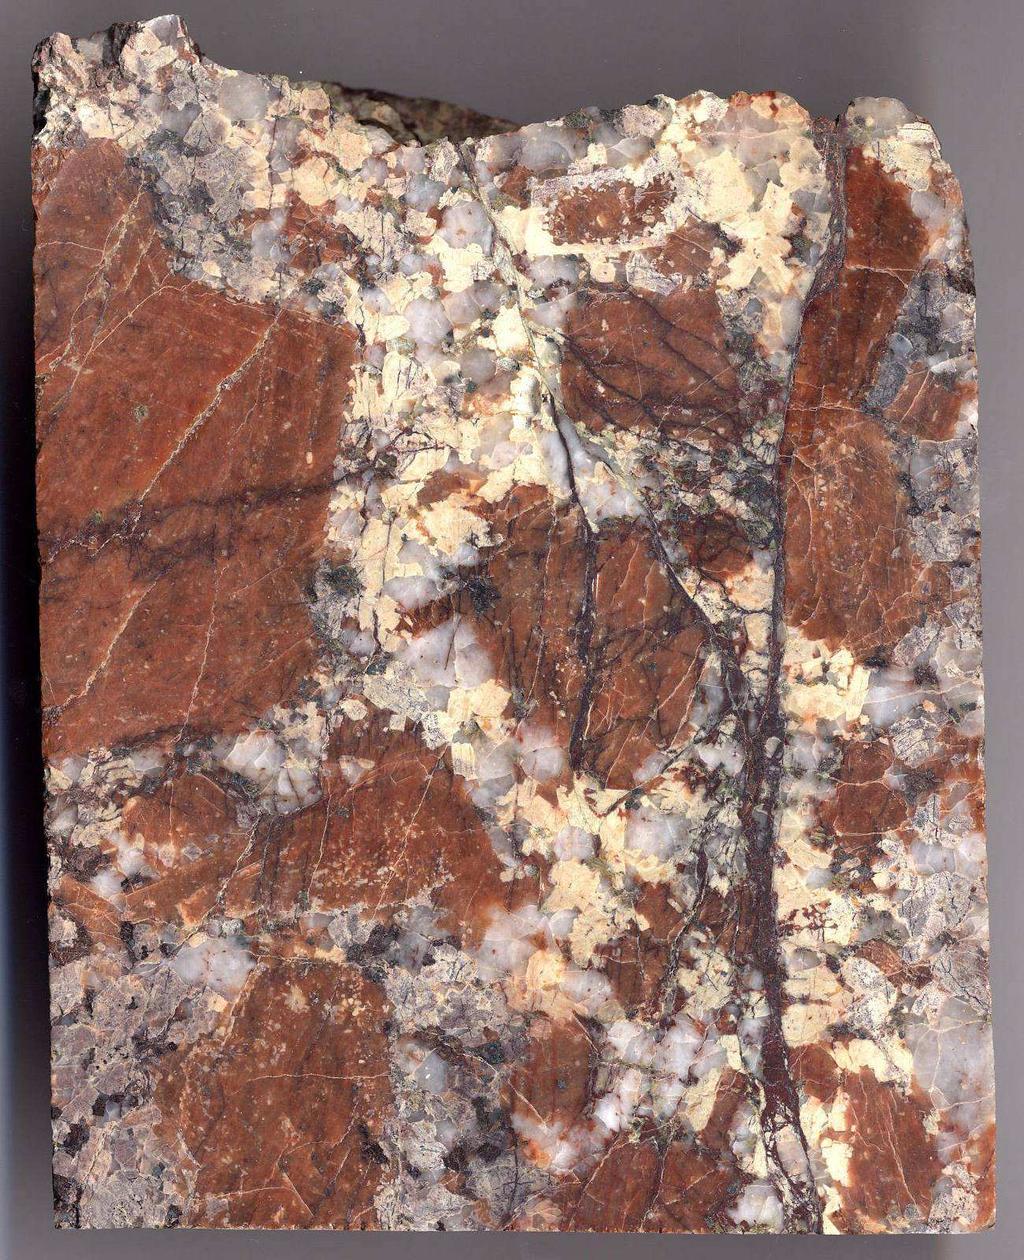 Reservoir Types: Granites Granite characteristics: Igneous rock (intrusive) Mineralogy Quartz, feldspar, mica Secondary minerals: calcite, quartz, clay minerals (illite, chlorite, kaolinite,